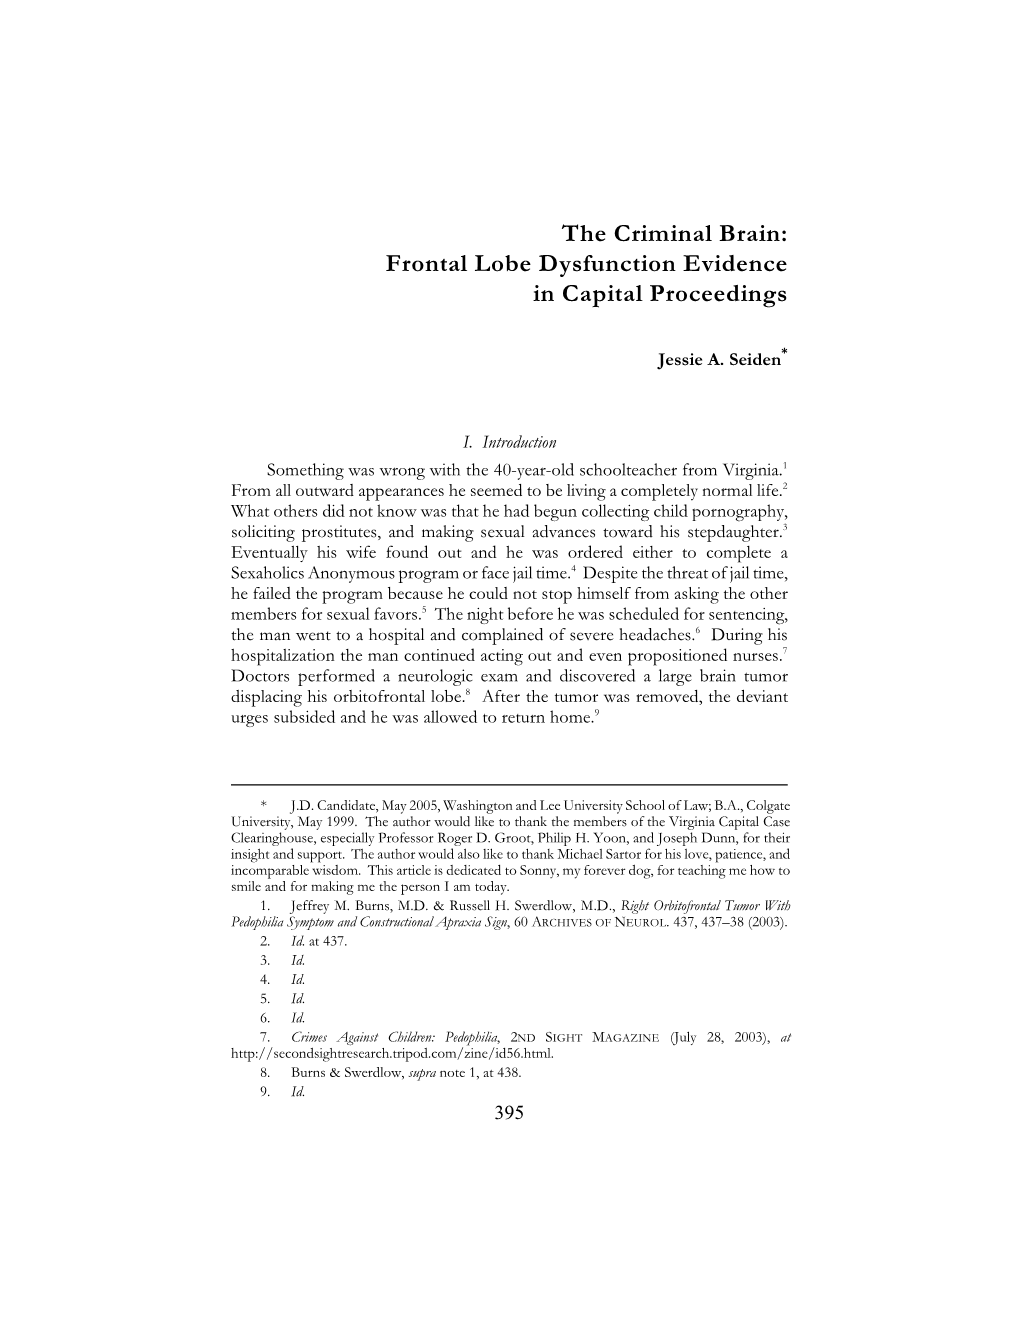 The Criminal Brain: Frontal Lobe Dysfunction Evidence in Capital Proceedings